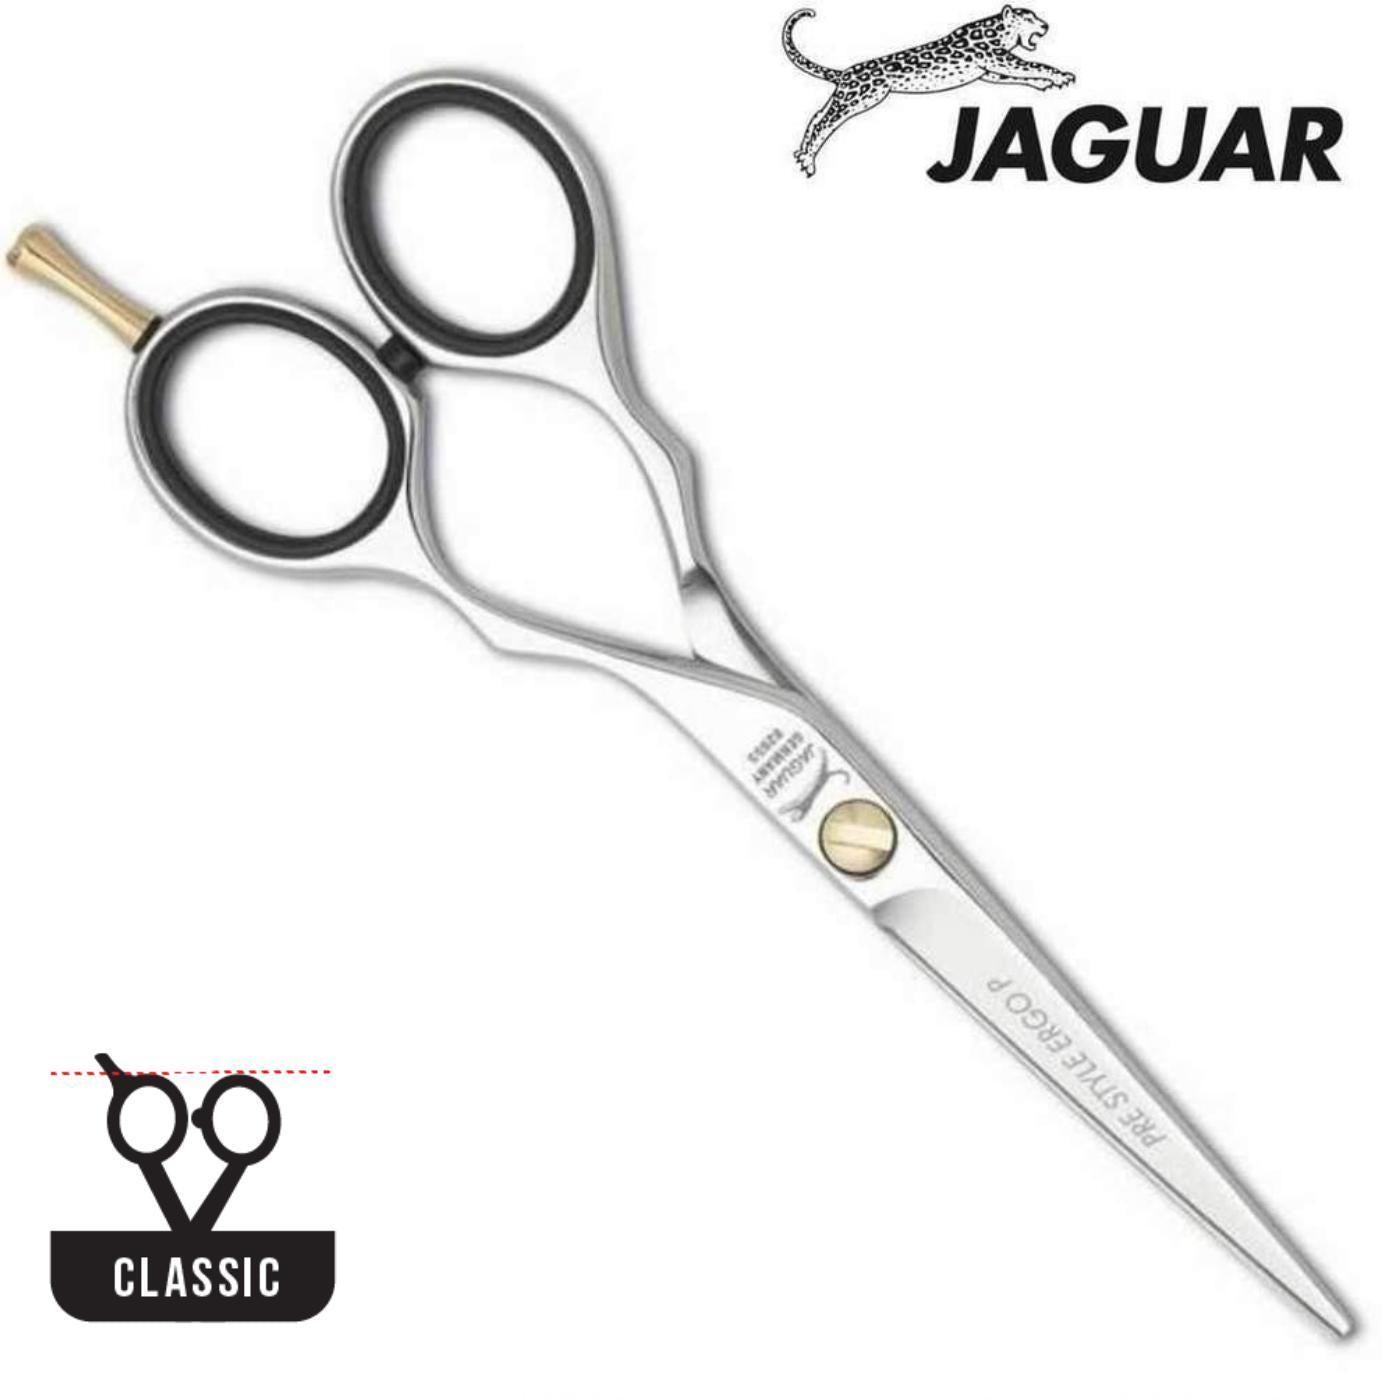 Jaguar Pre Style Ergo Cutting Shear